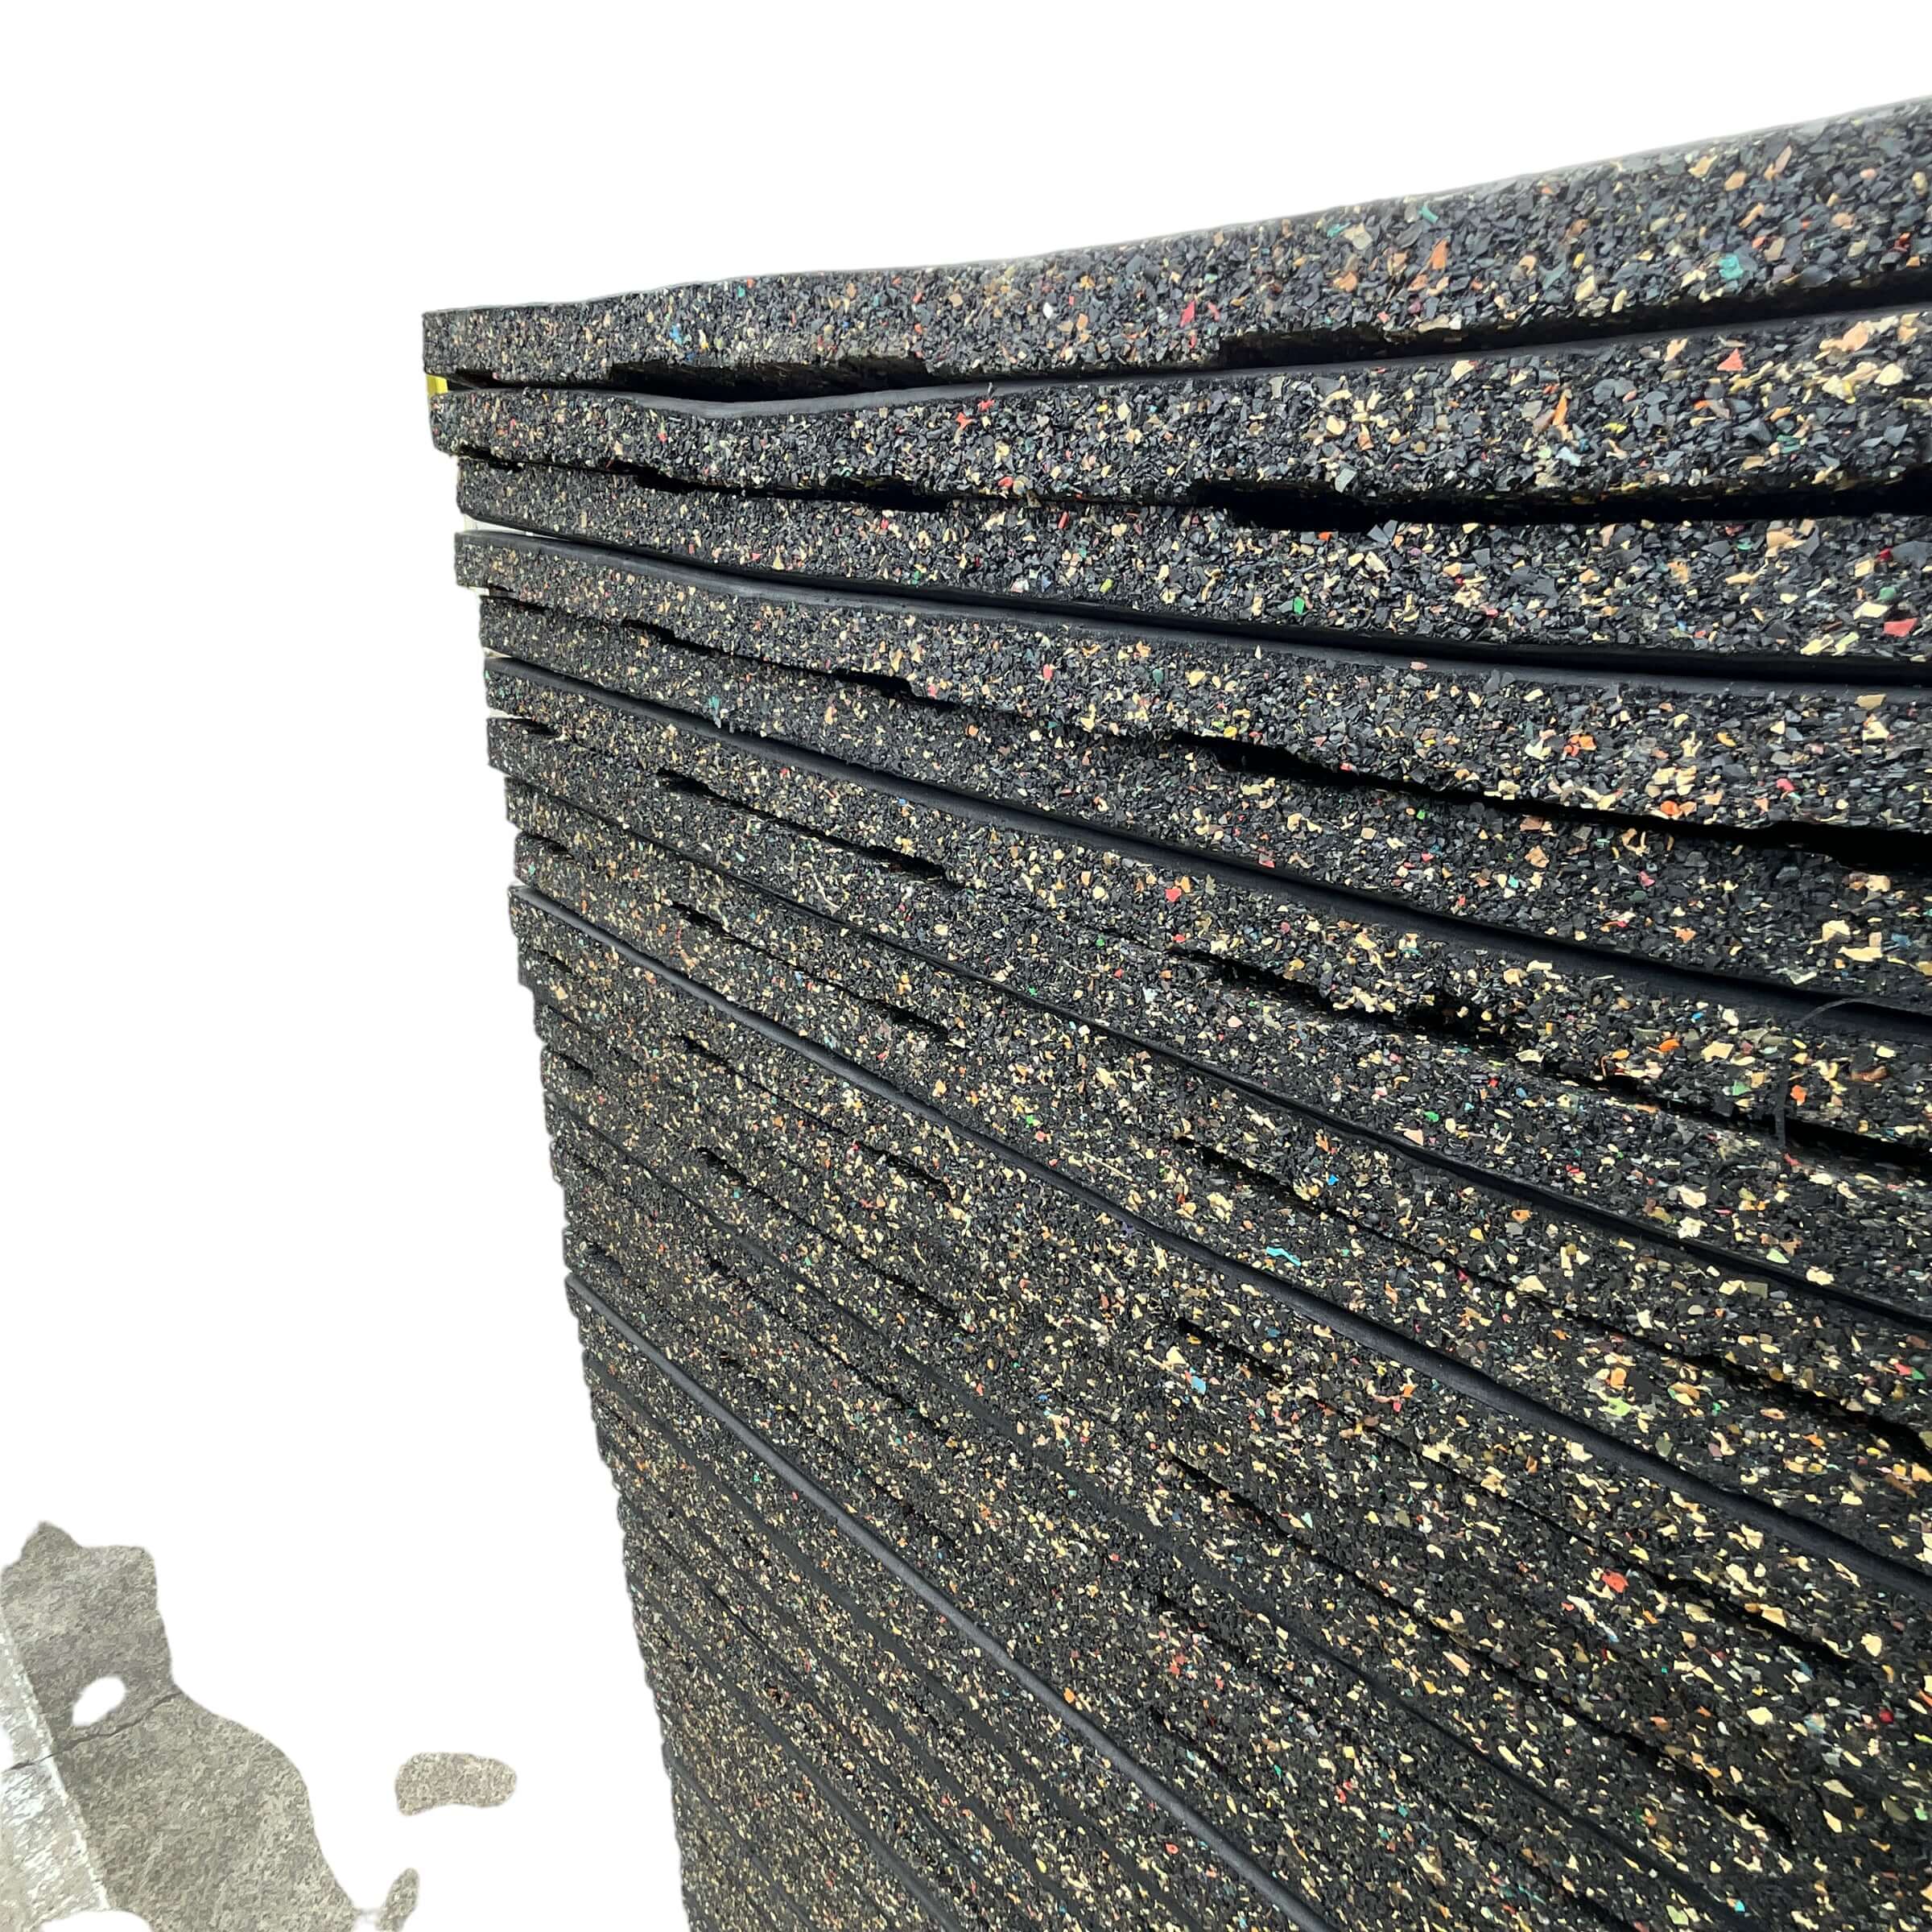 Pack of 50 - 20mm Rubber Gym Flooring Dual Density EPDM Rubber Dense Tile Mat 1m x 1m BLACK | INSOURCE